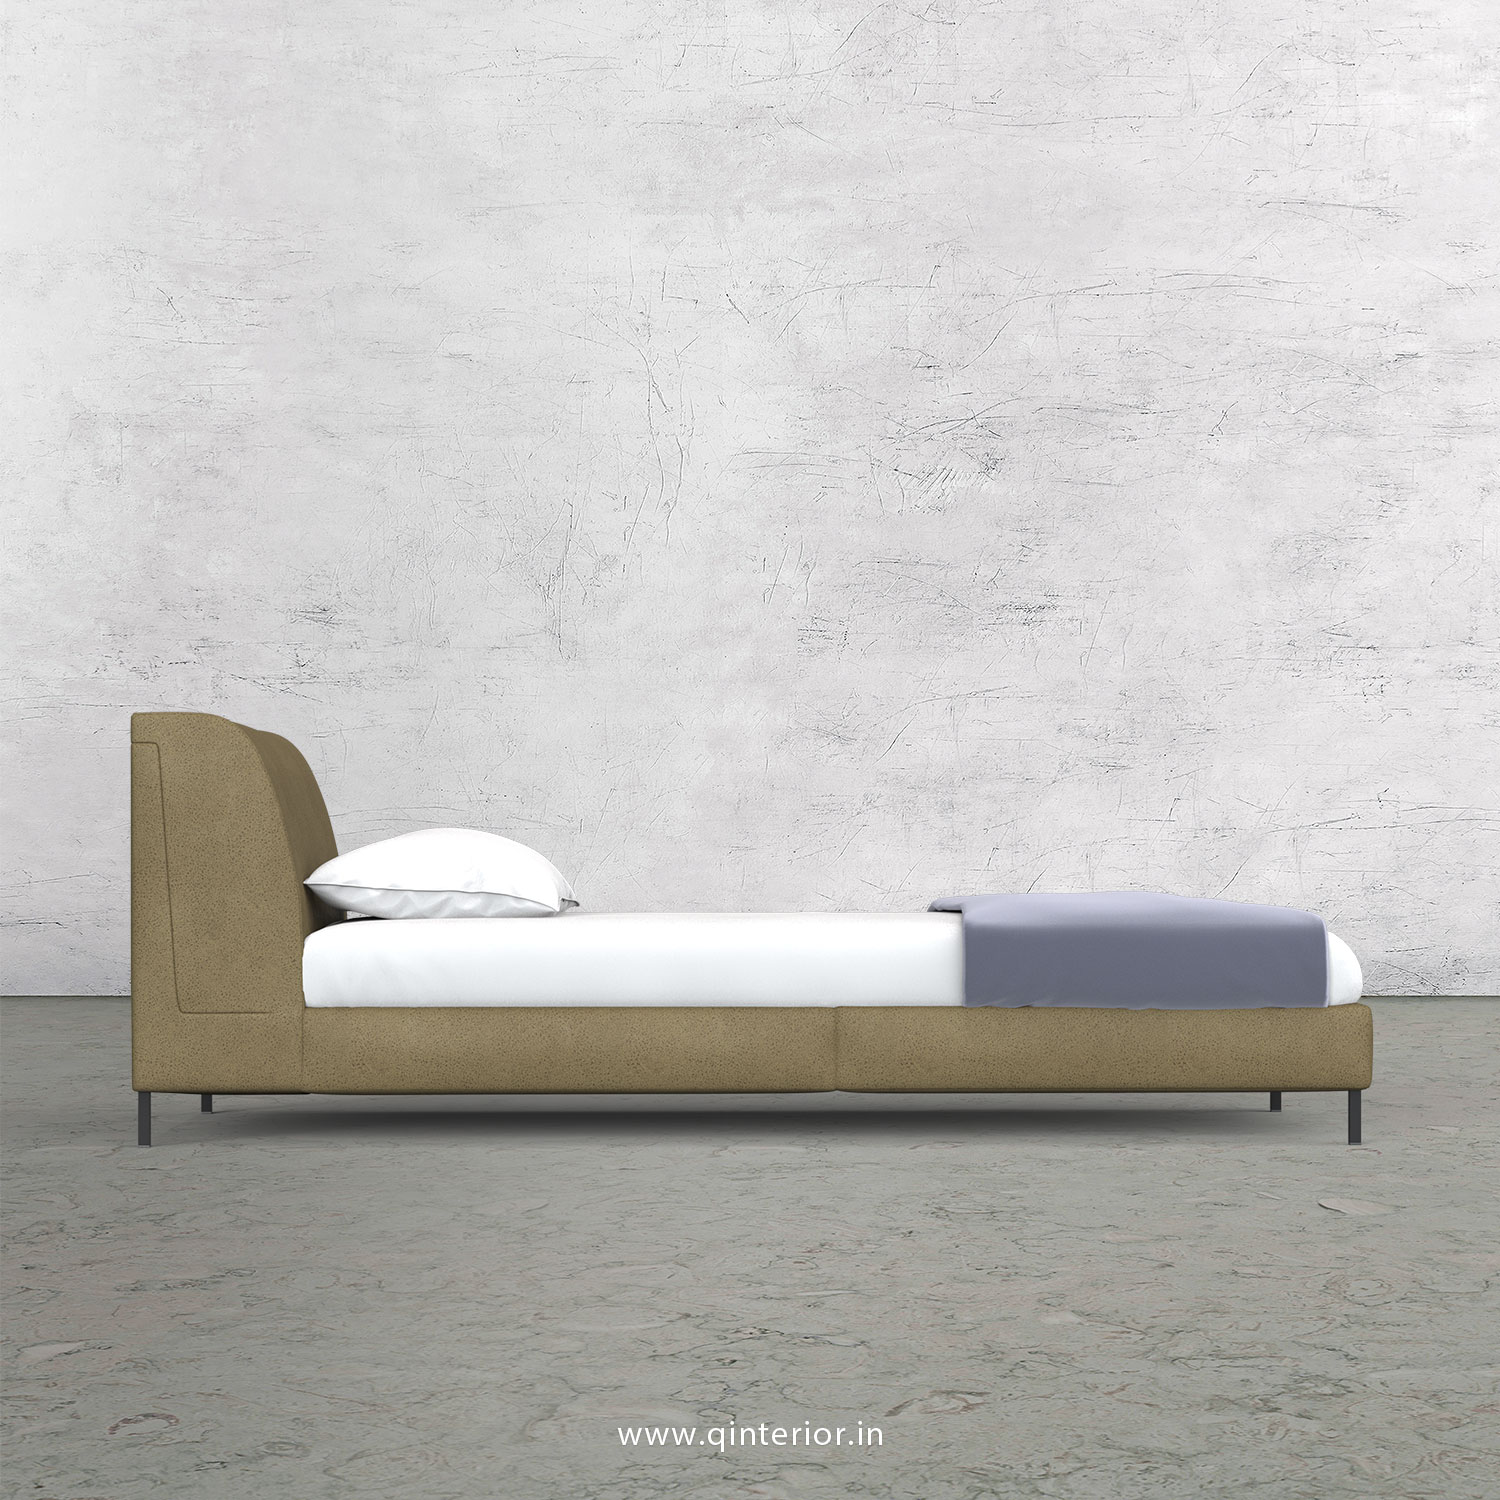 LUXURA Single Bed in Fab Leather – SBD003 FL01